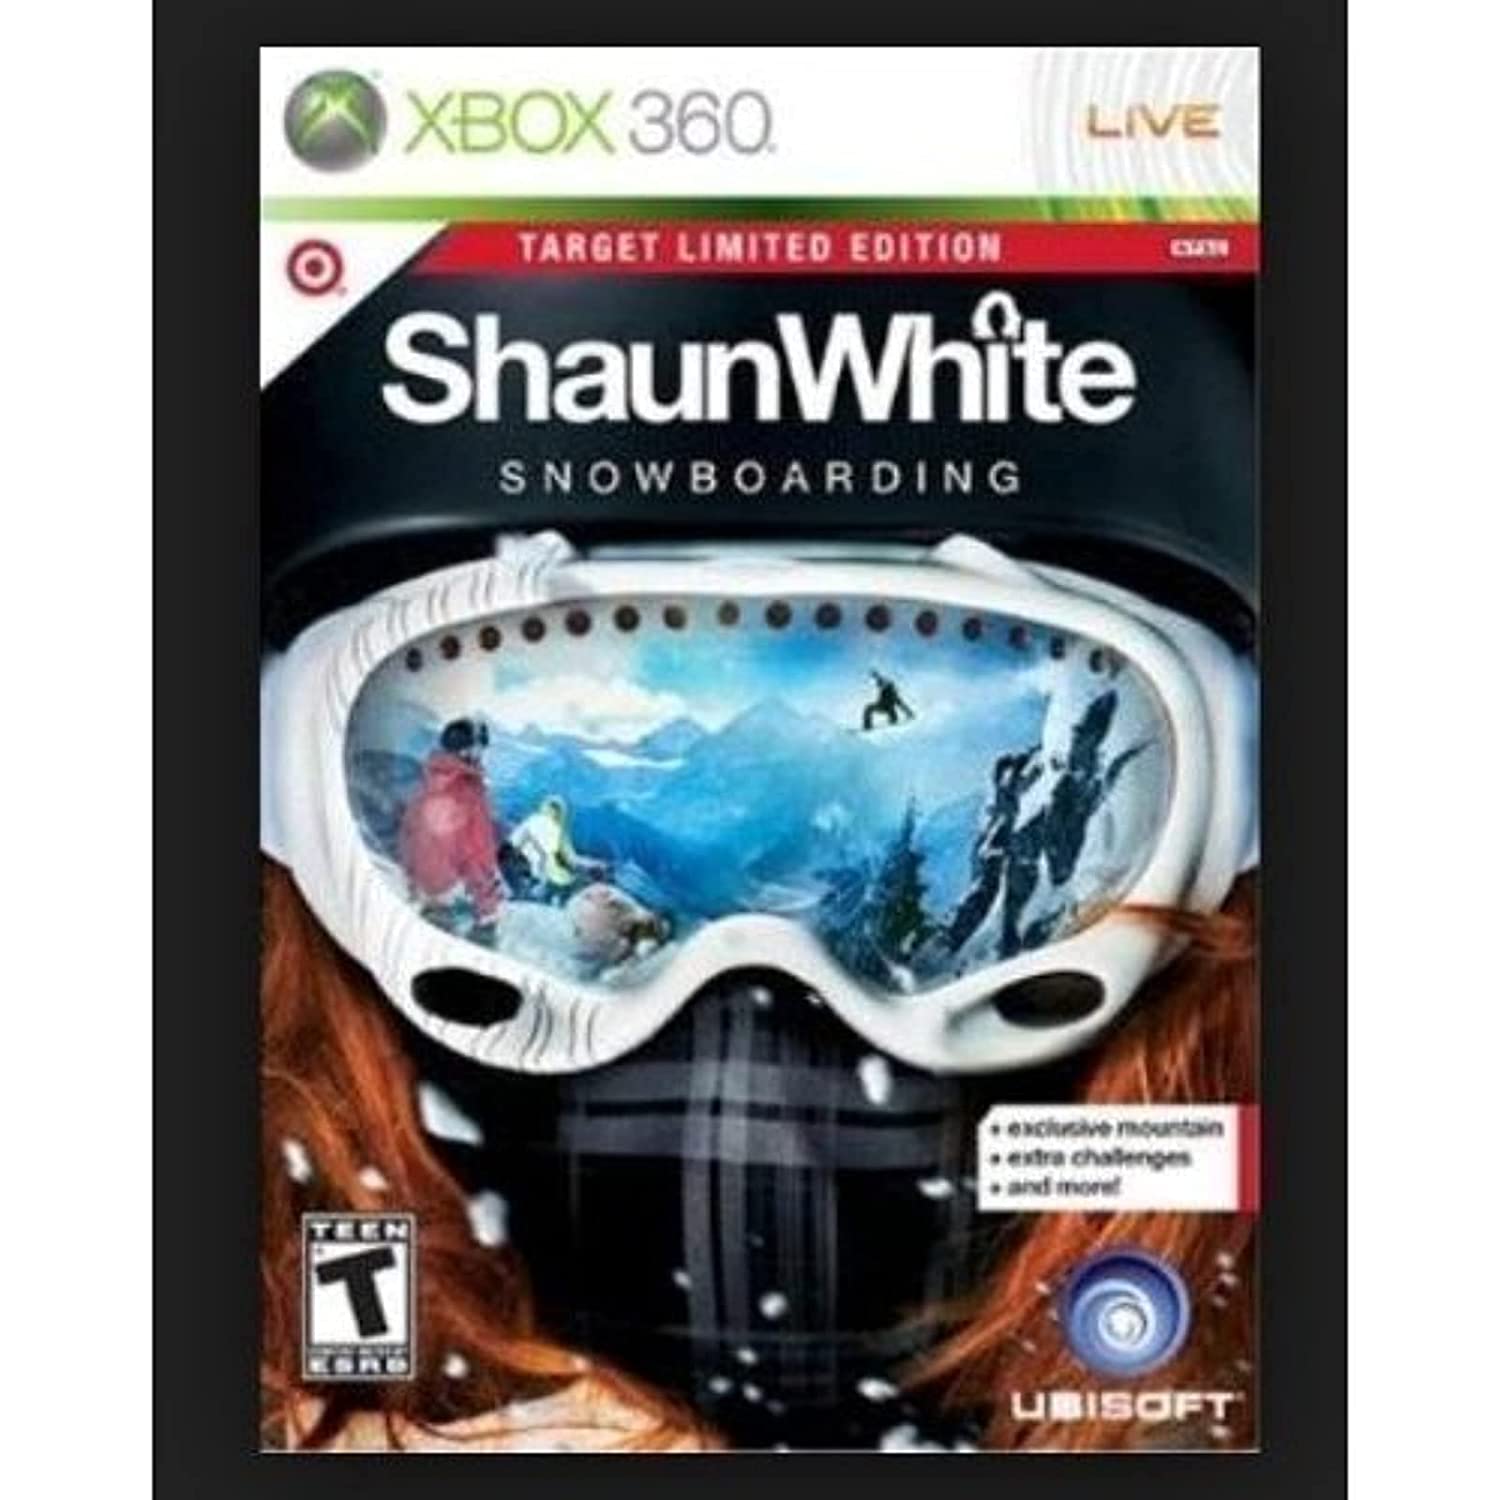 Shaun White Snowboarding [Target Limited Edition]